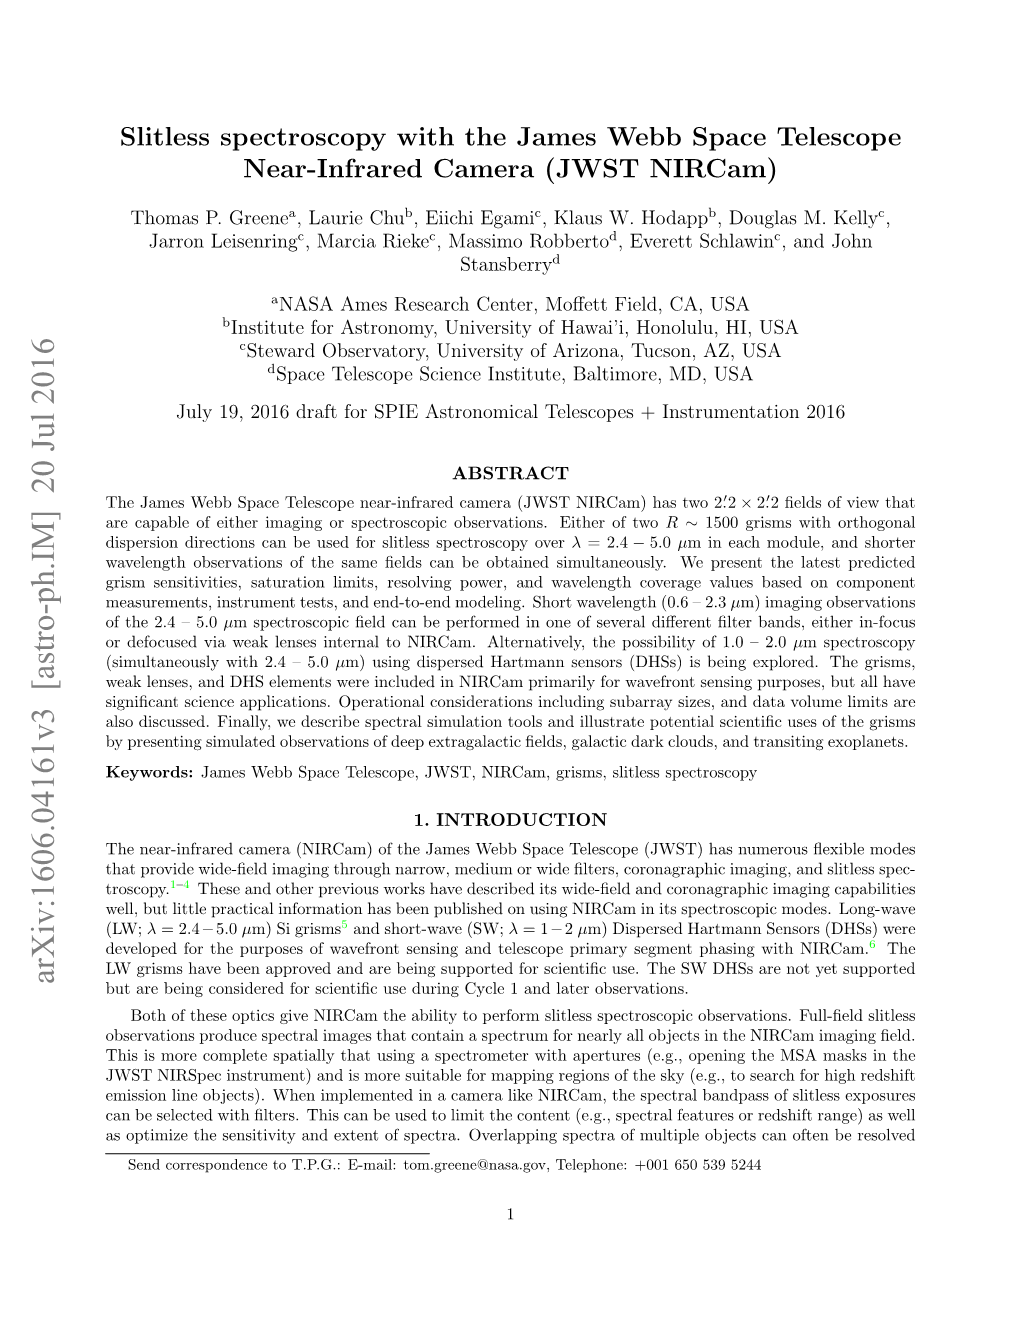 Slitless Spectroscopy with the James Webb Space Telescope Near-Infrared Camera (JWST Nircam)